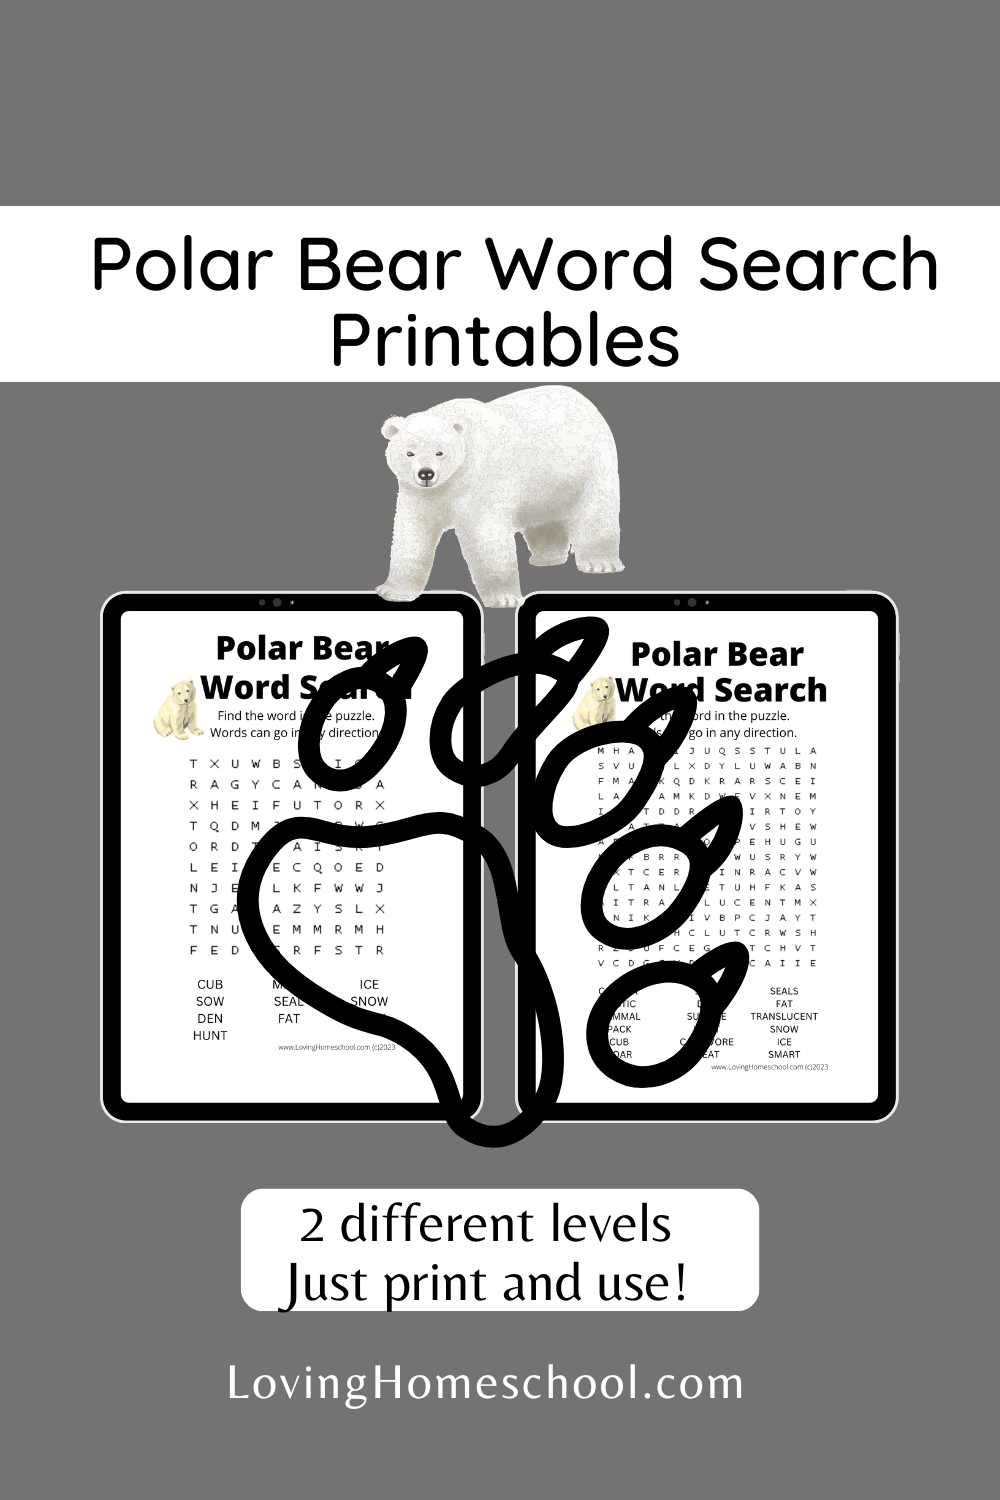 Polar Bear Word Search Printables Pinterest Pin